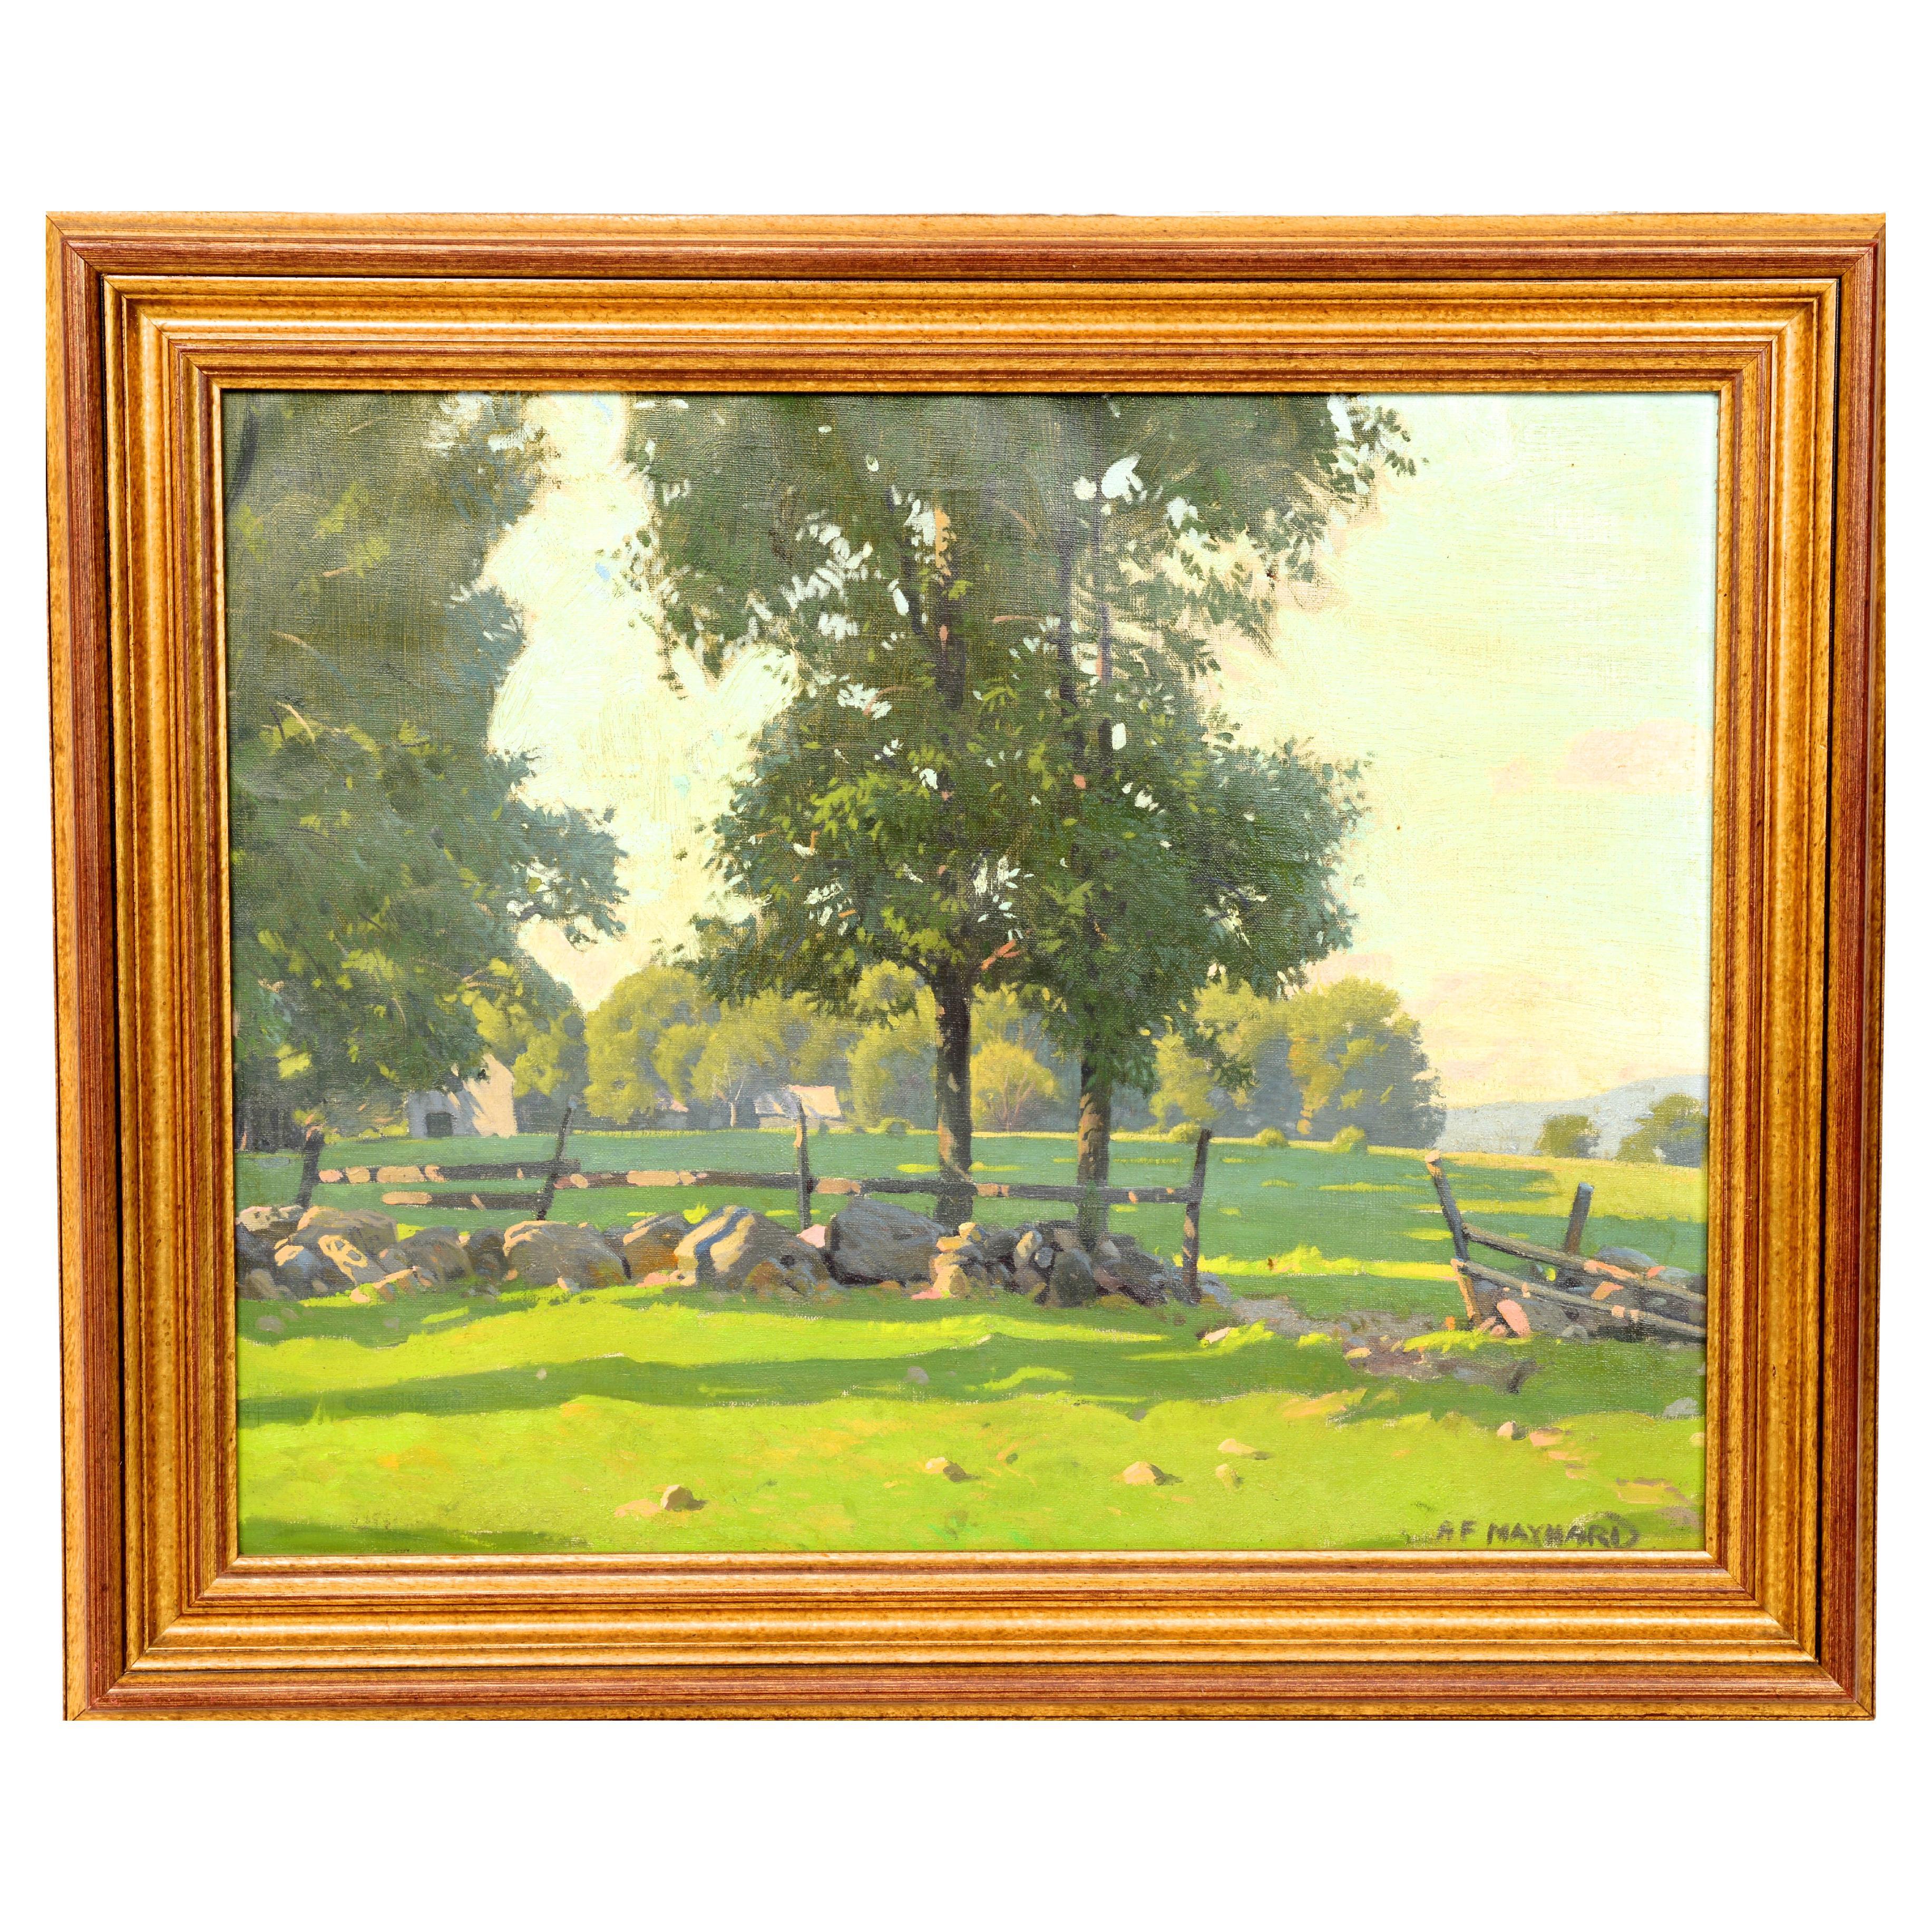 Arthur F. Maynard, Signed Oil on Canvas, a Rural Landscape